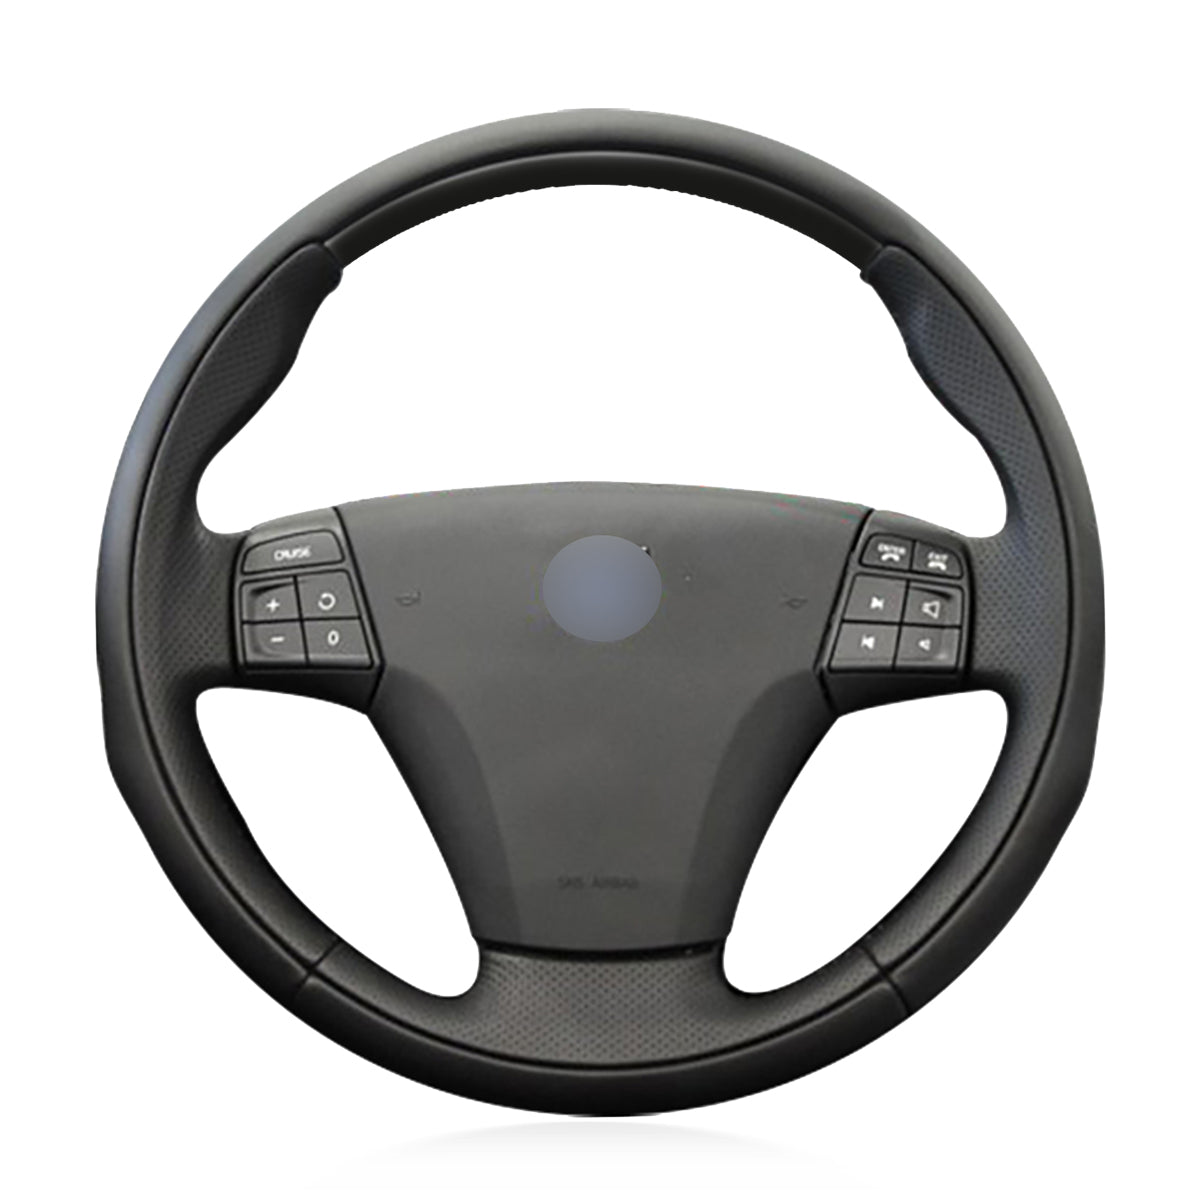 Car steering wheel cover for Volvo C70 2008-2010